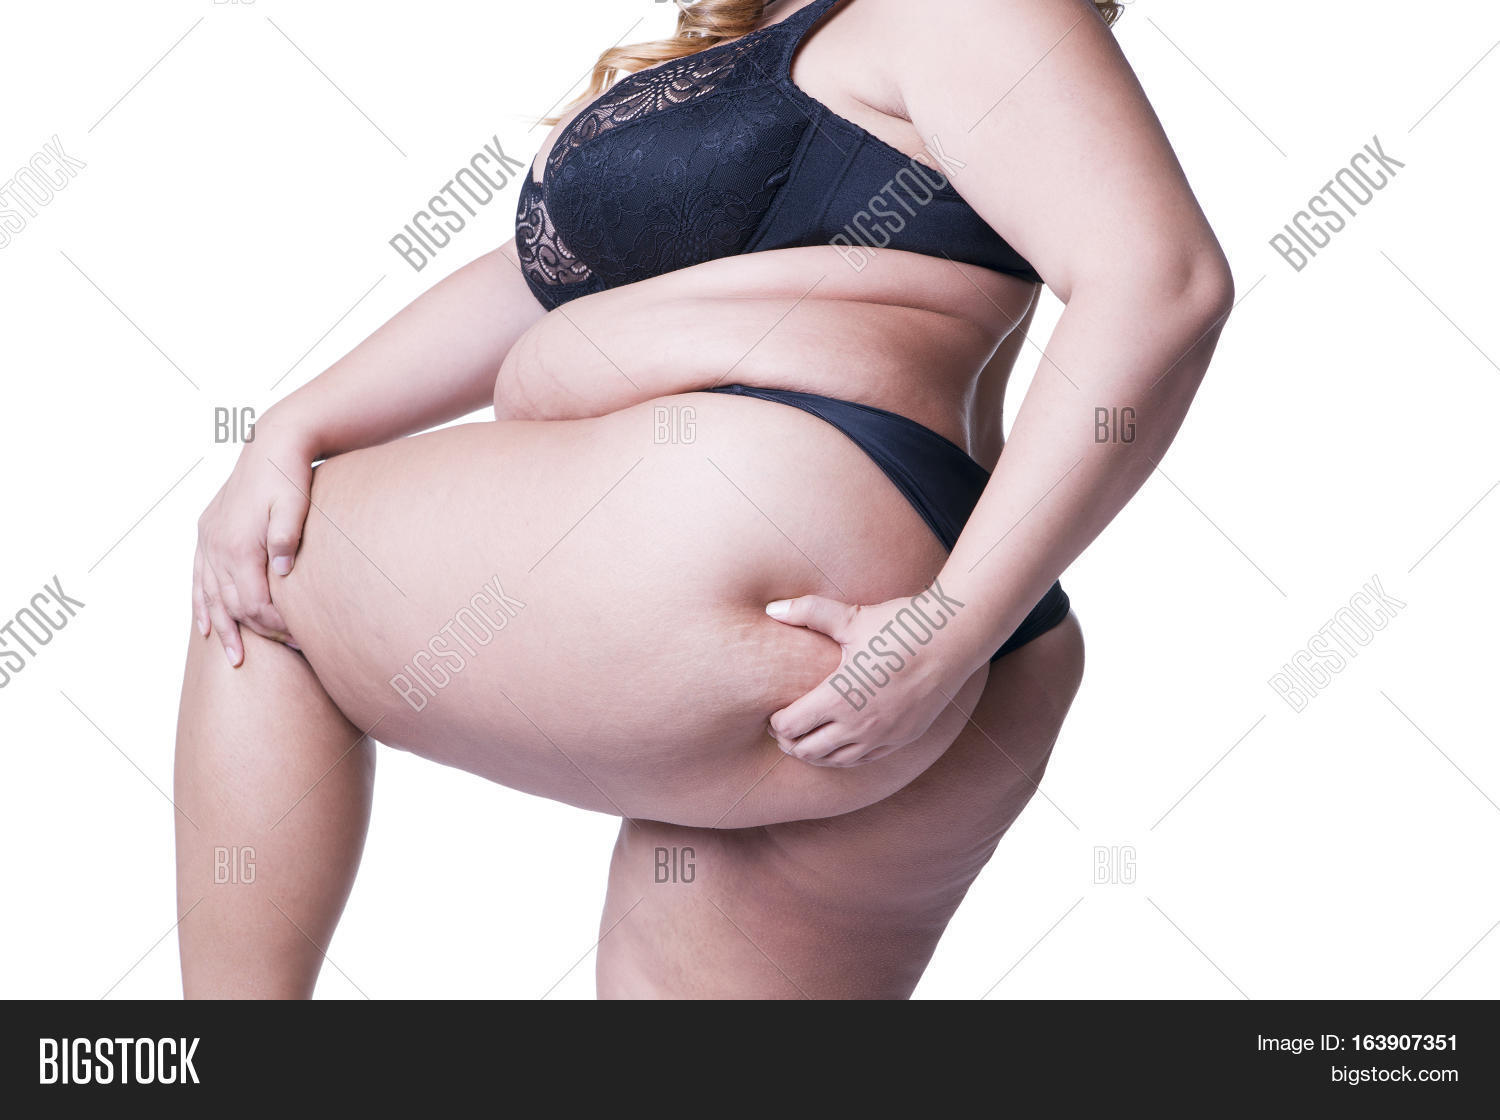 brandon pribula add thick woman in lingerie photo